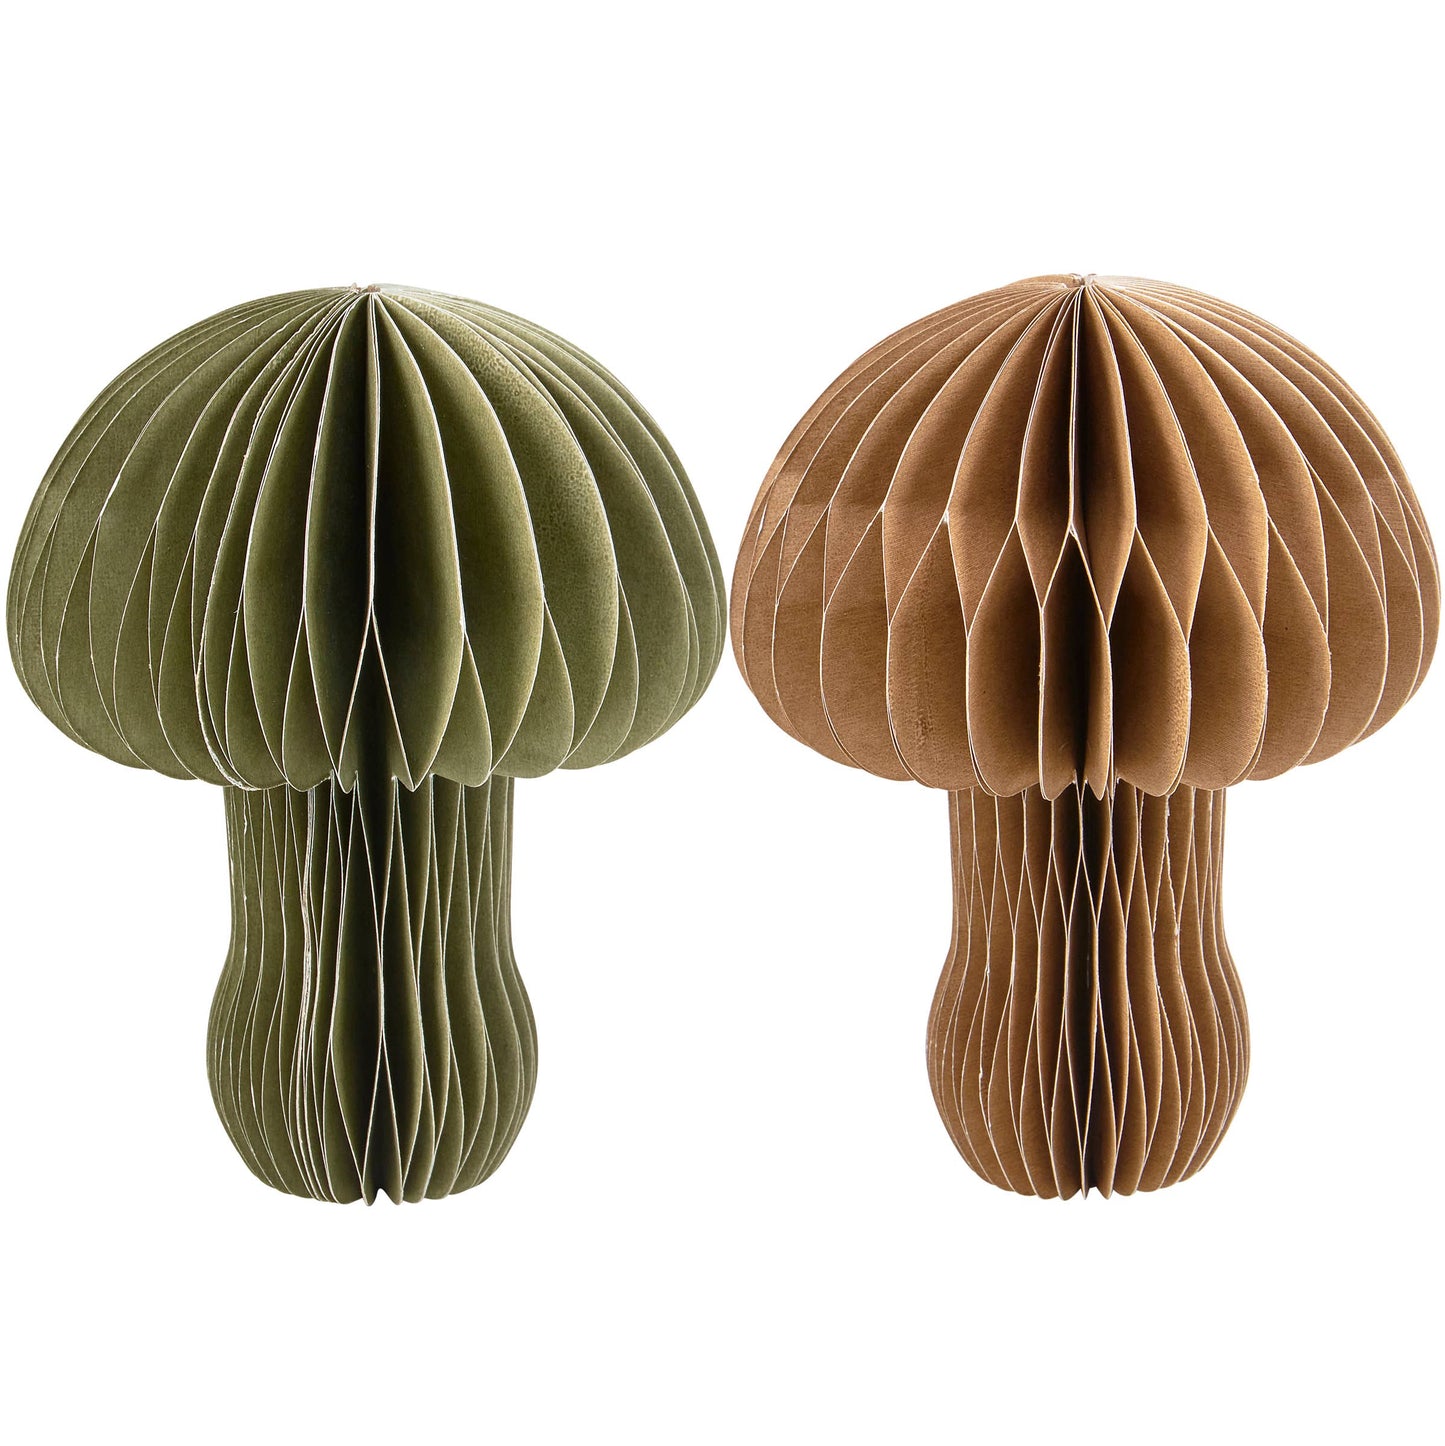 Paper Honeycomb  Mushroom Set